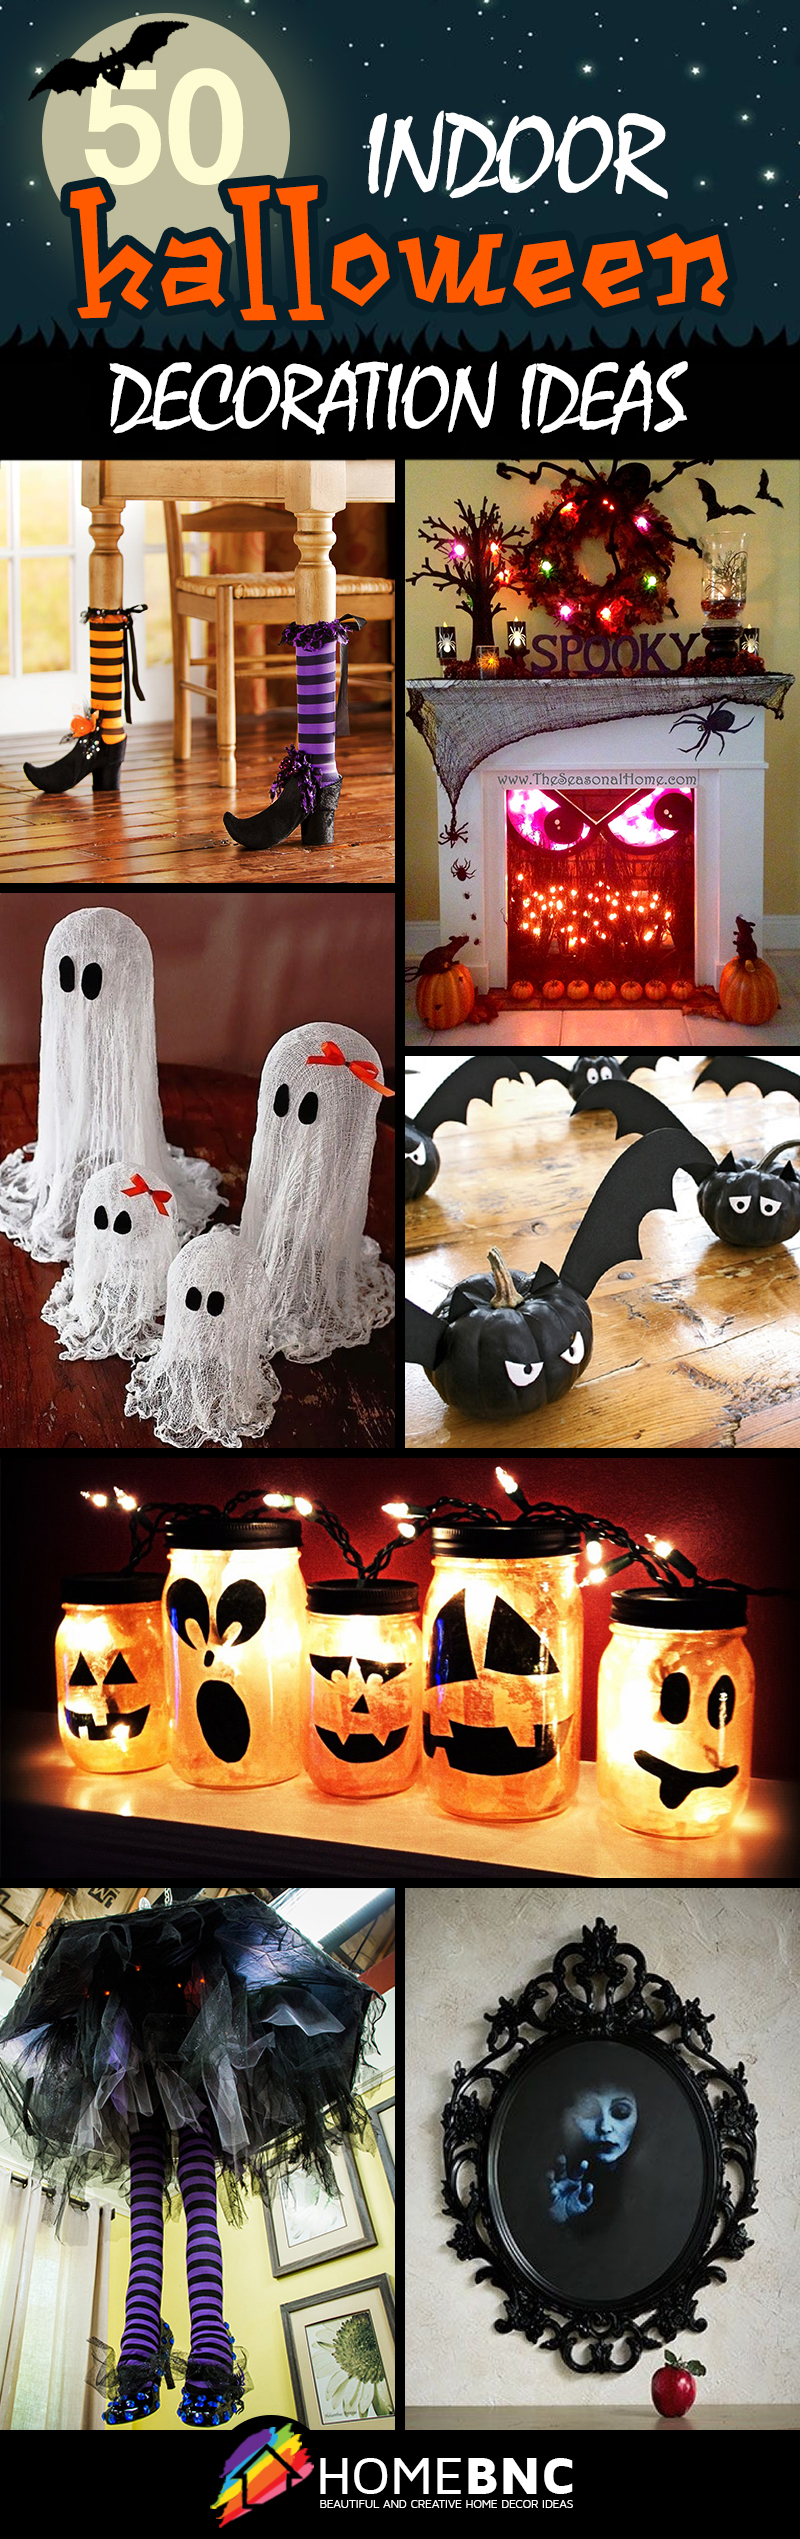 Indoor Halloween Decoration Ideas